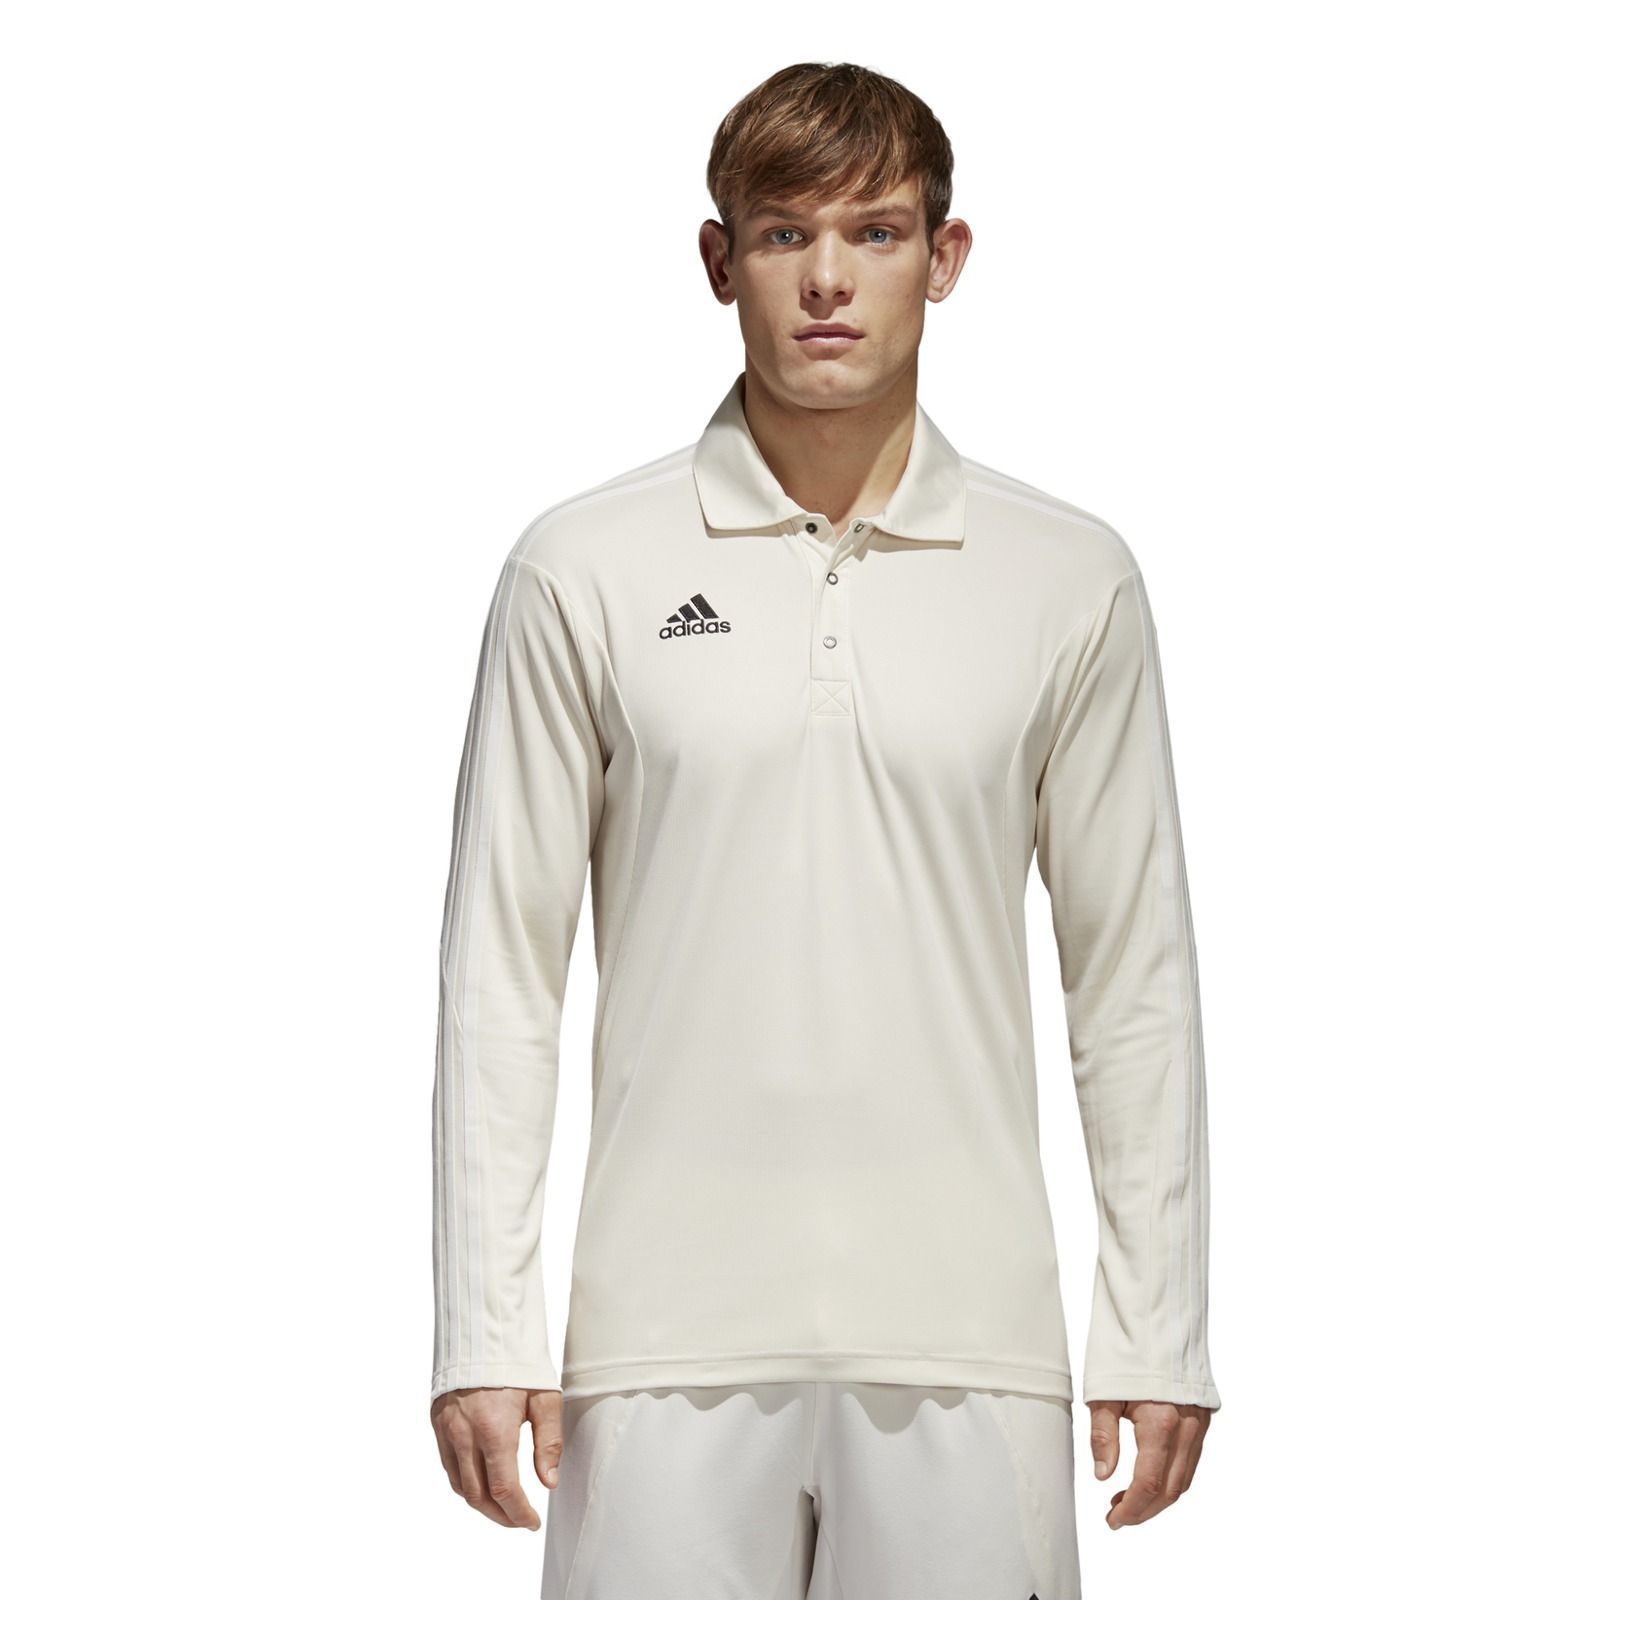 adidas Long Sleeve Cricket Shirt - Kitlocker.com